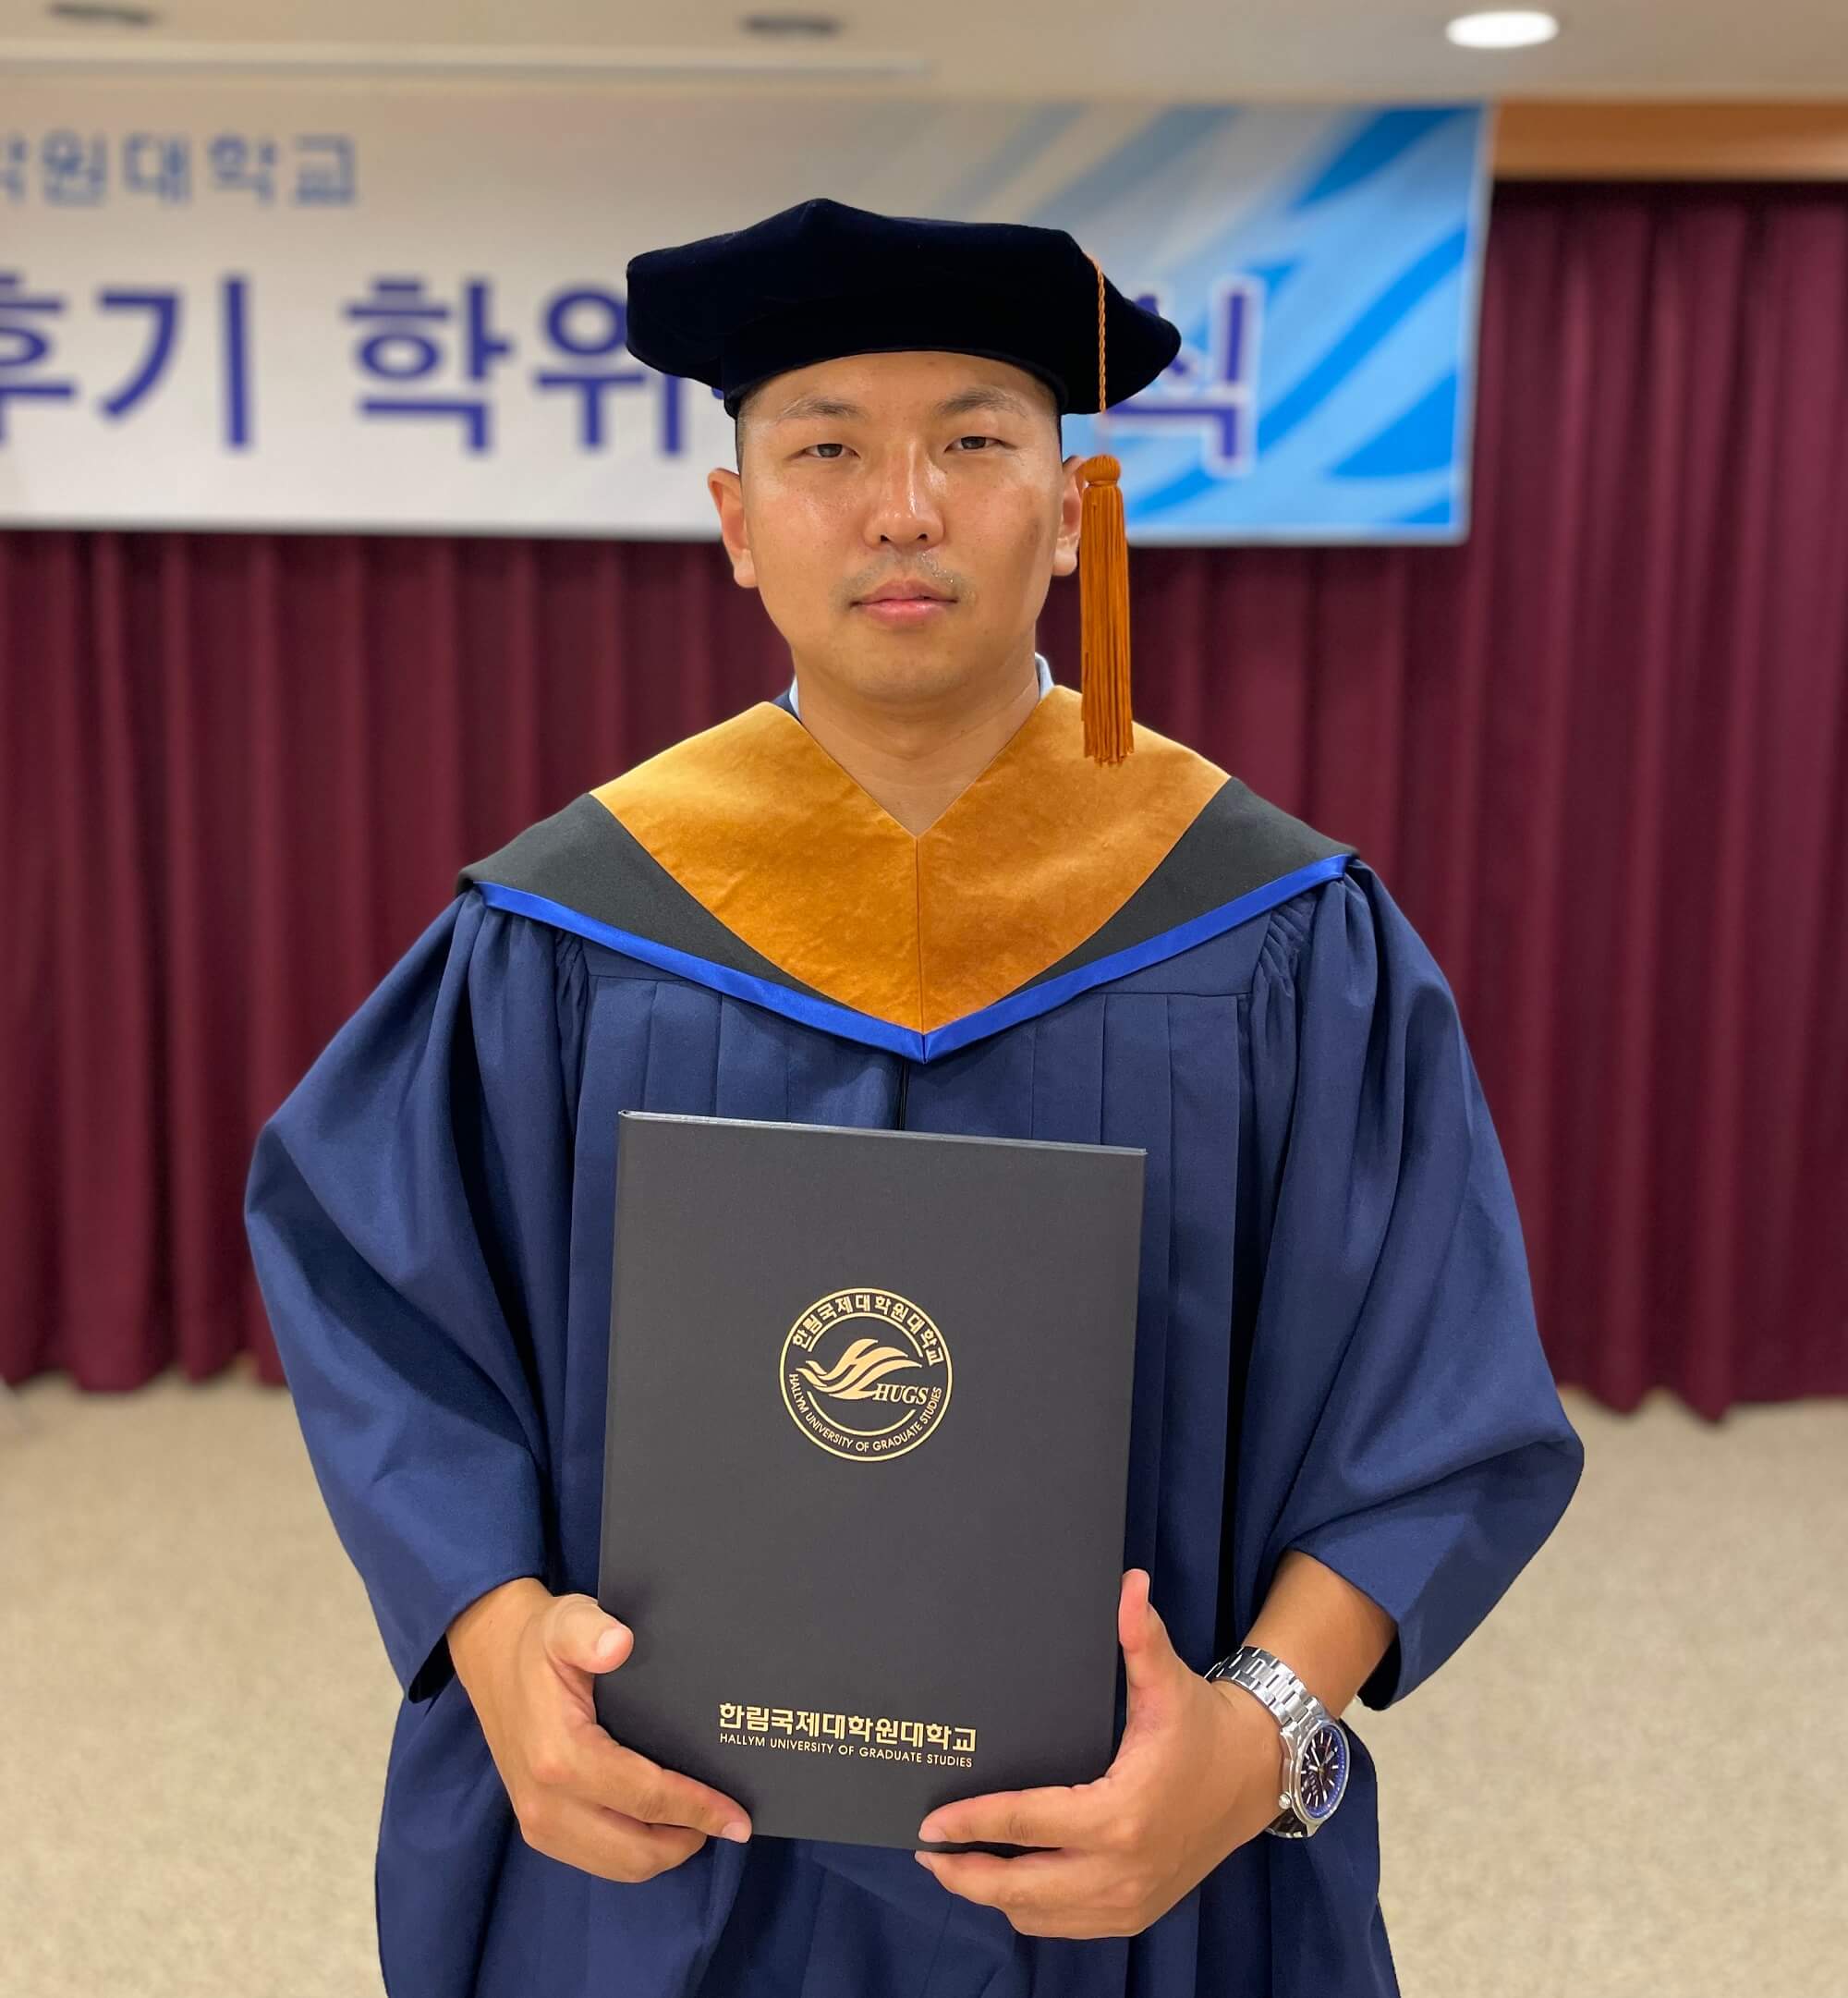 master graduation in Hallym university